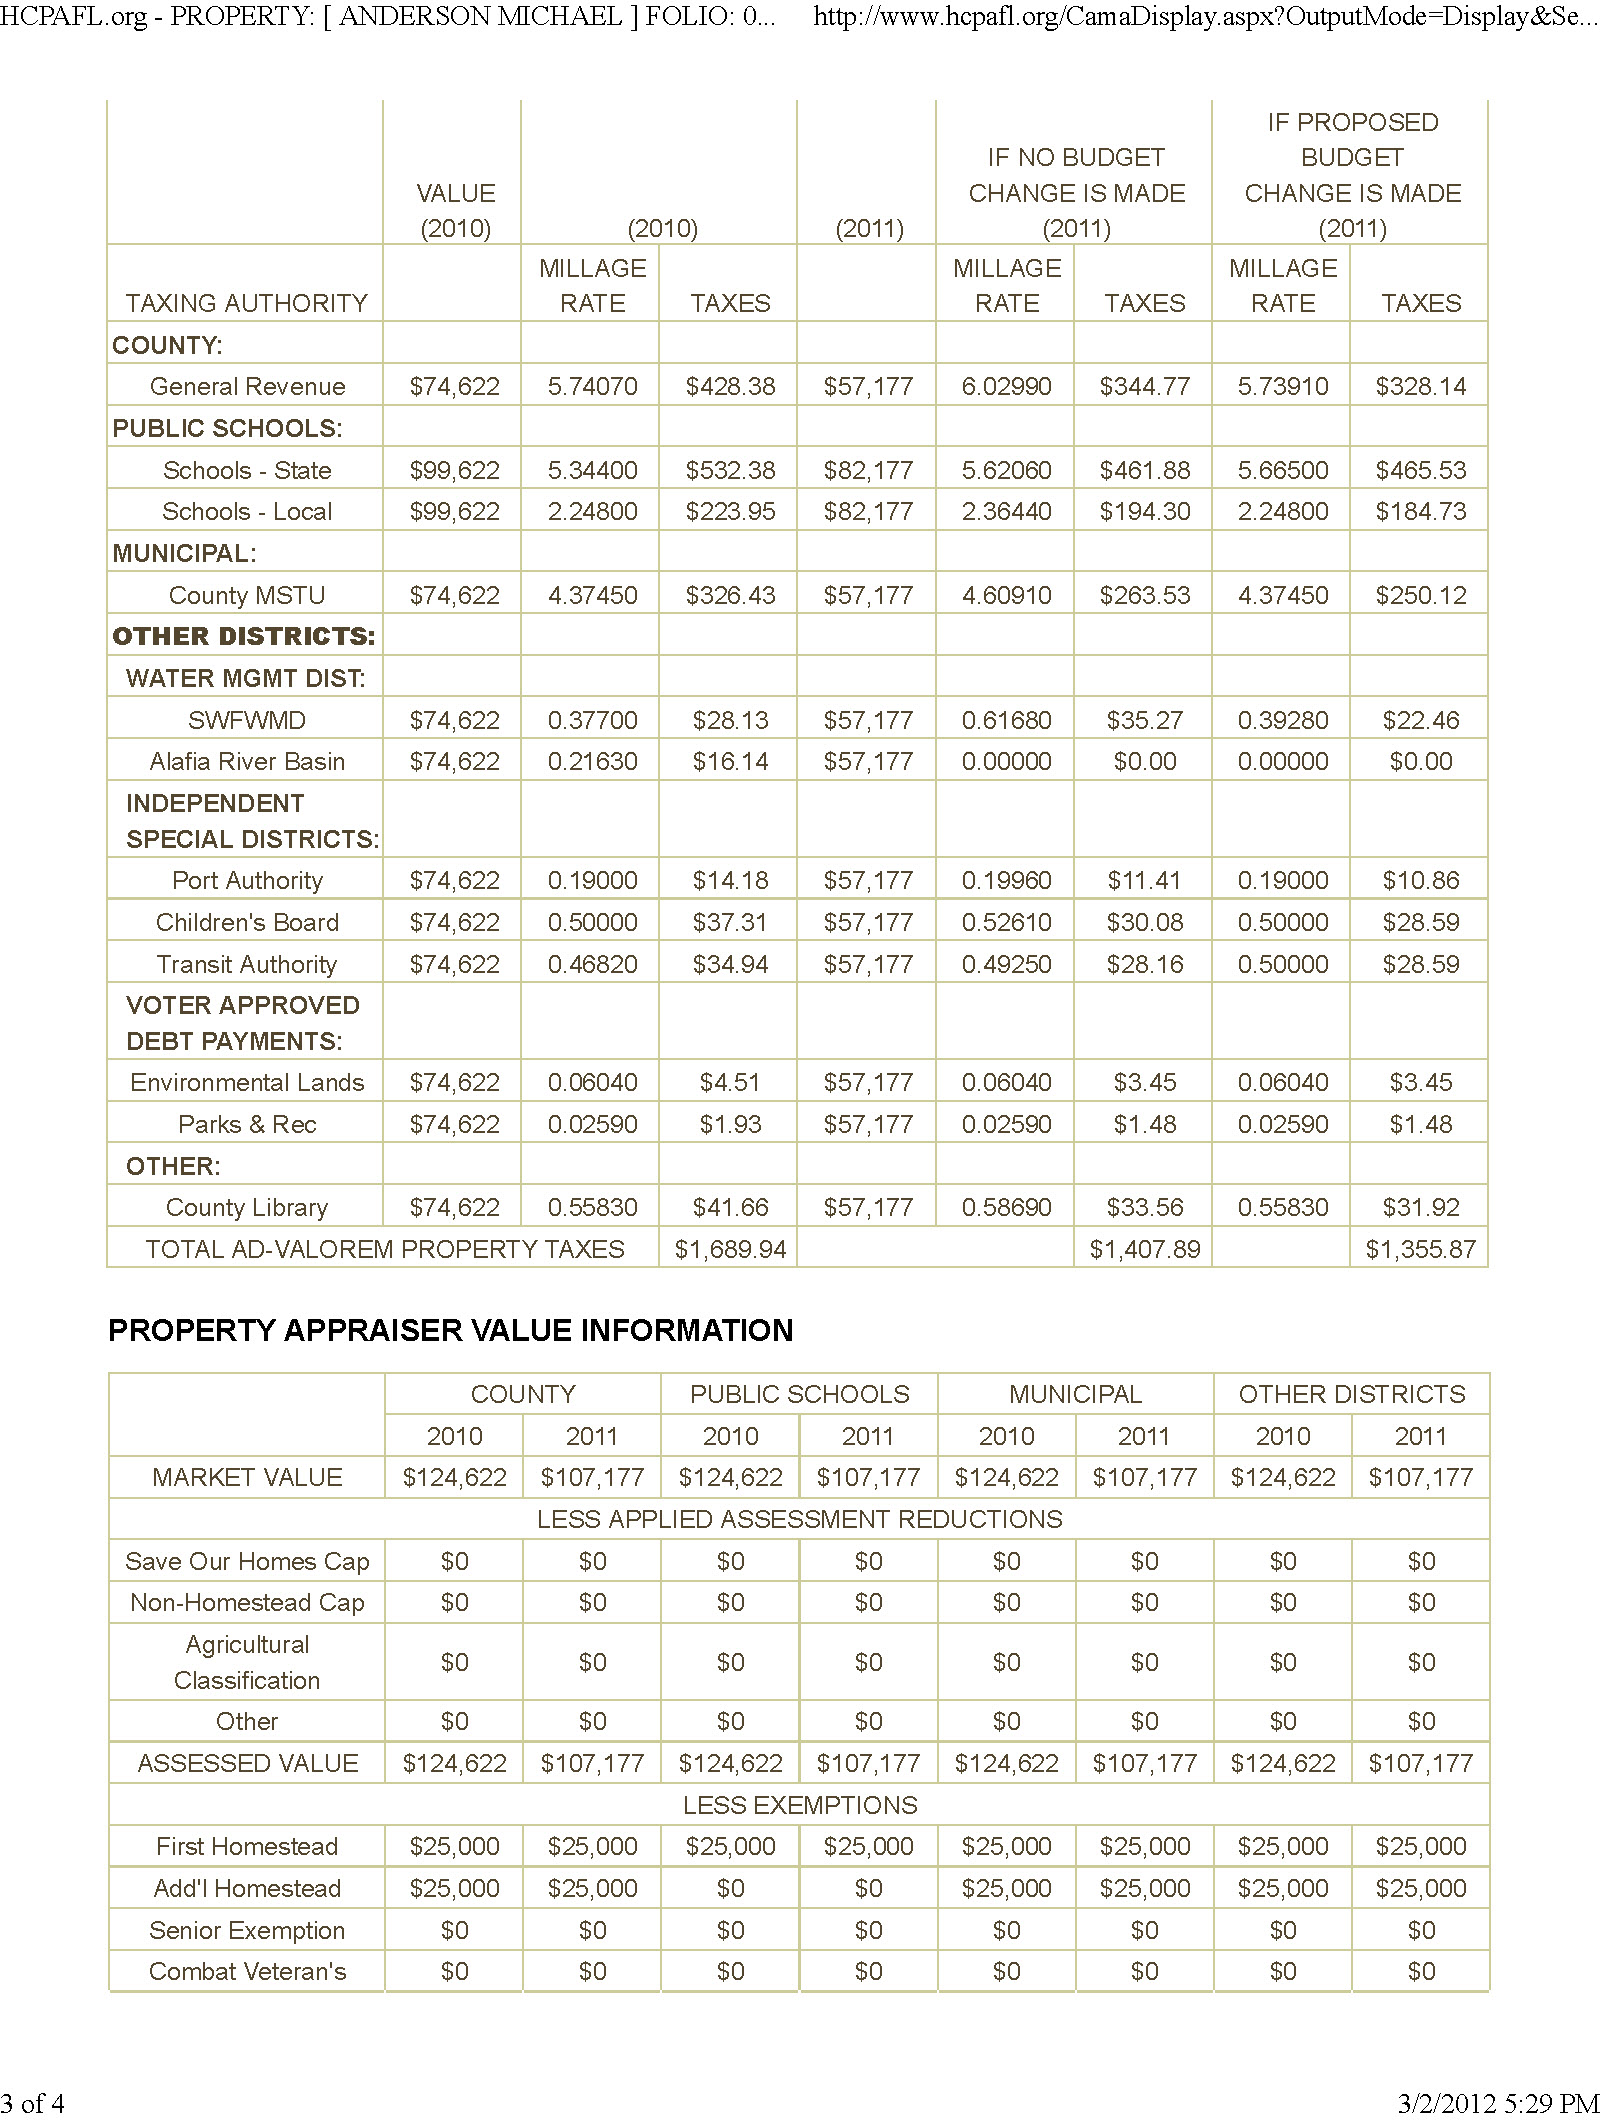 Copy of anderson ethel property tax info3.jpg